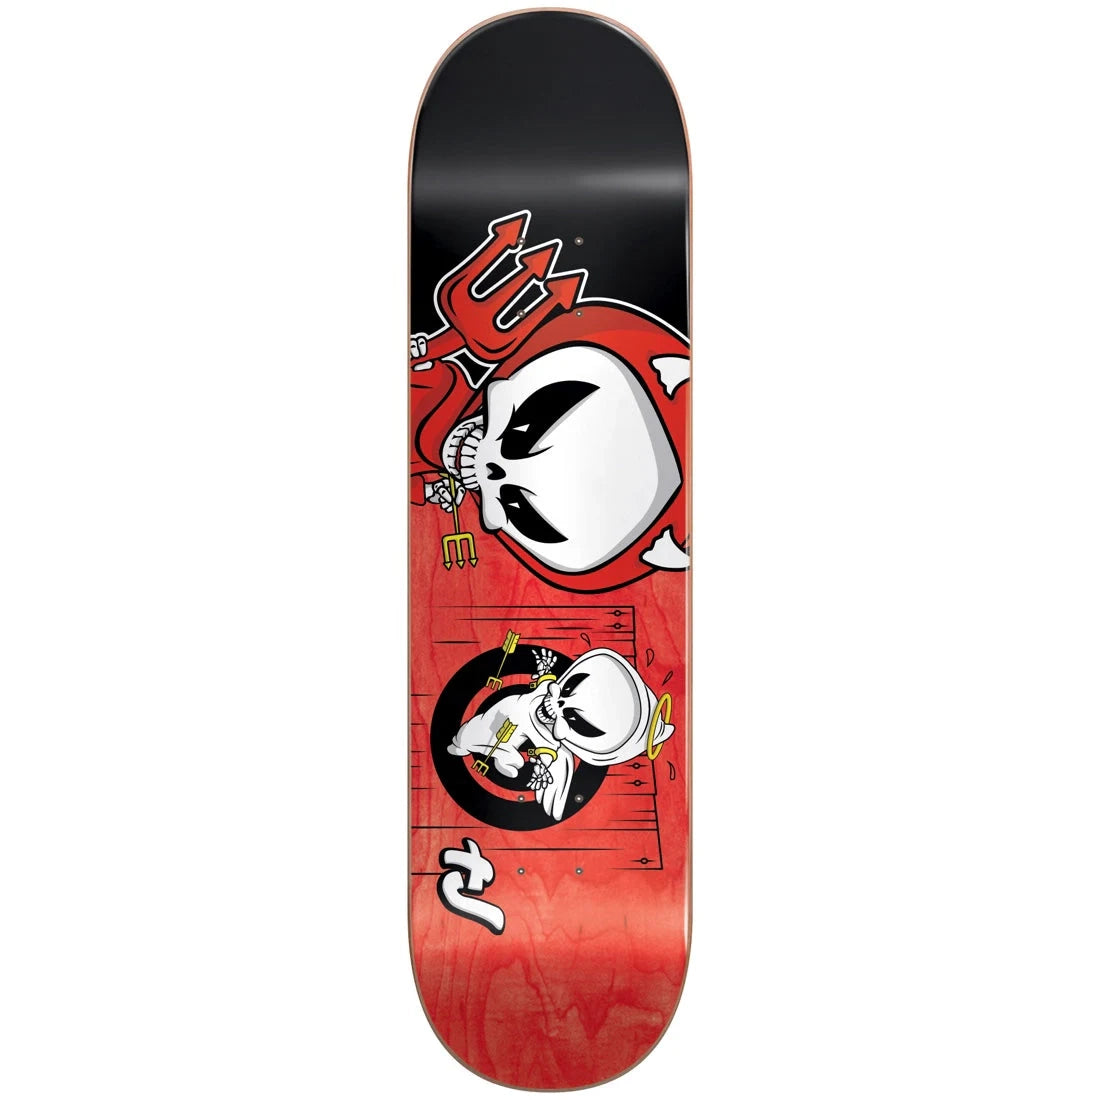 Blind Tj Reaper Vs Reaper Resin 7 8.375" Skateboard Deck